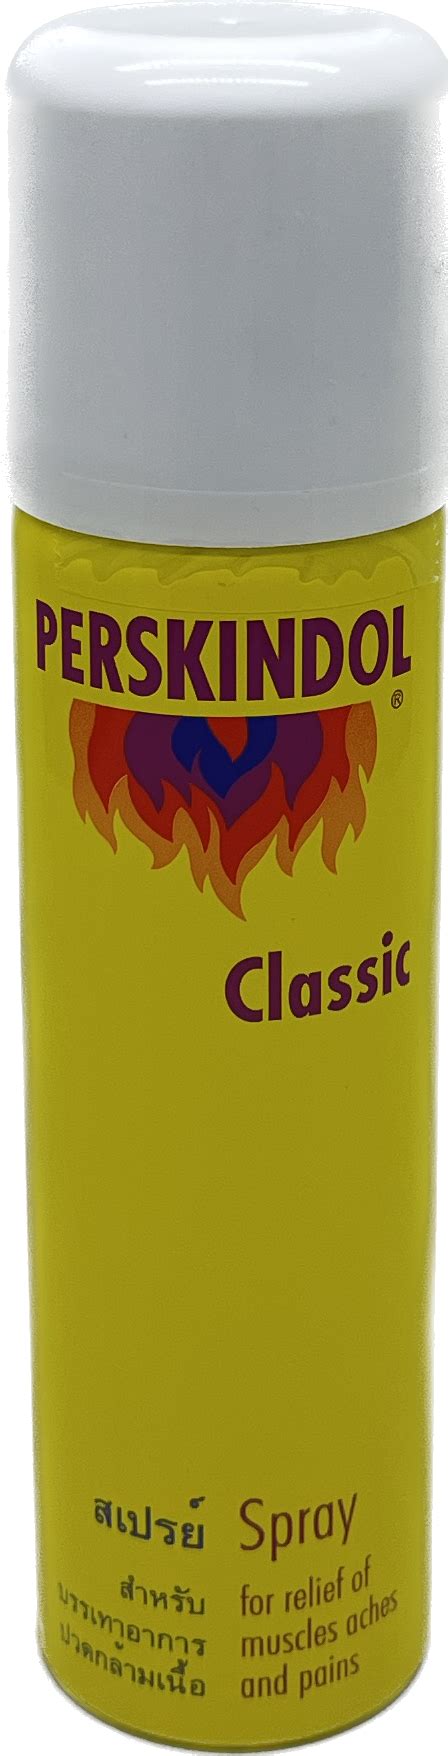 Perskindol Classic Spray